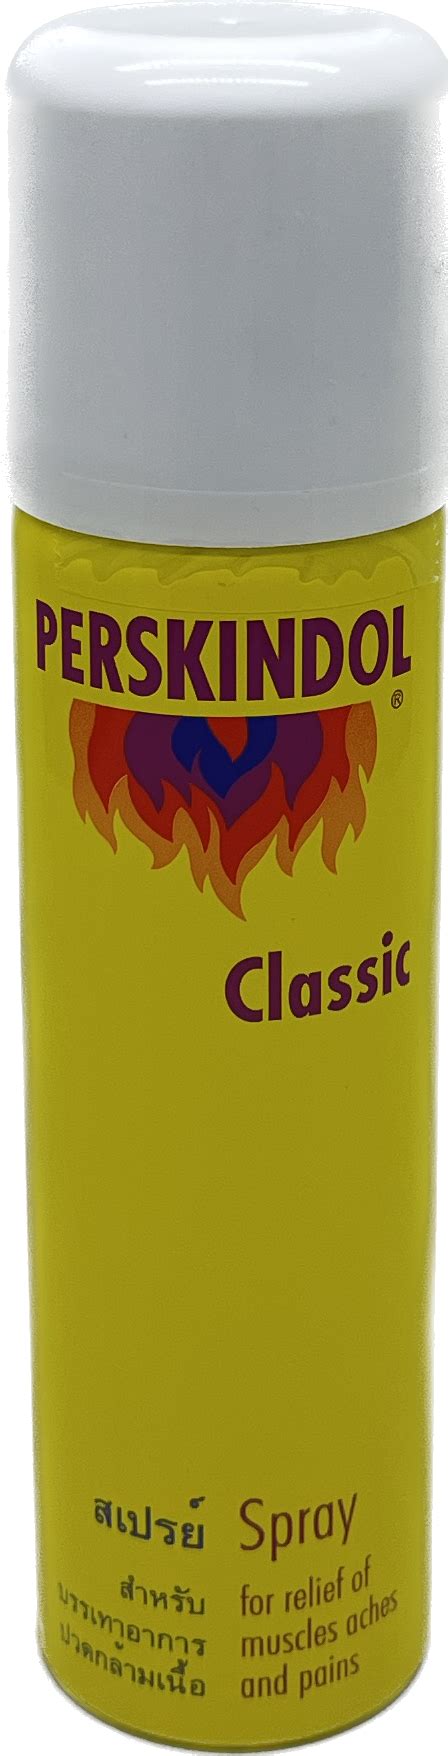 Perskindol Classic Spray